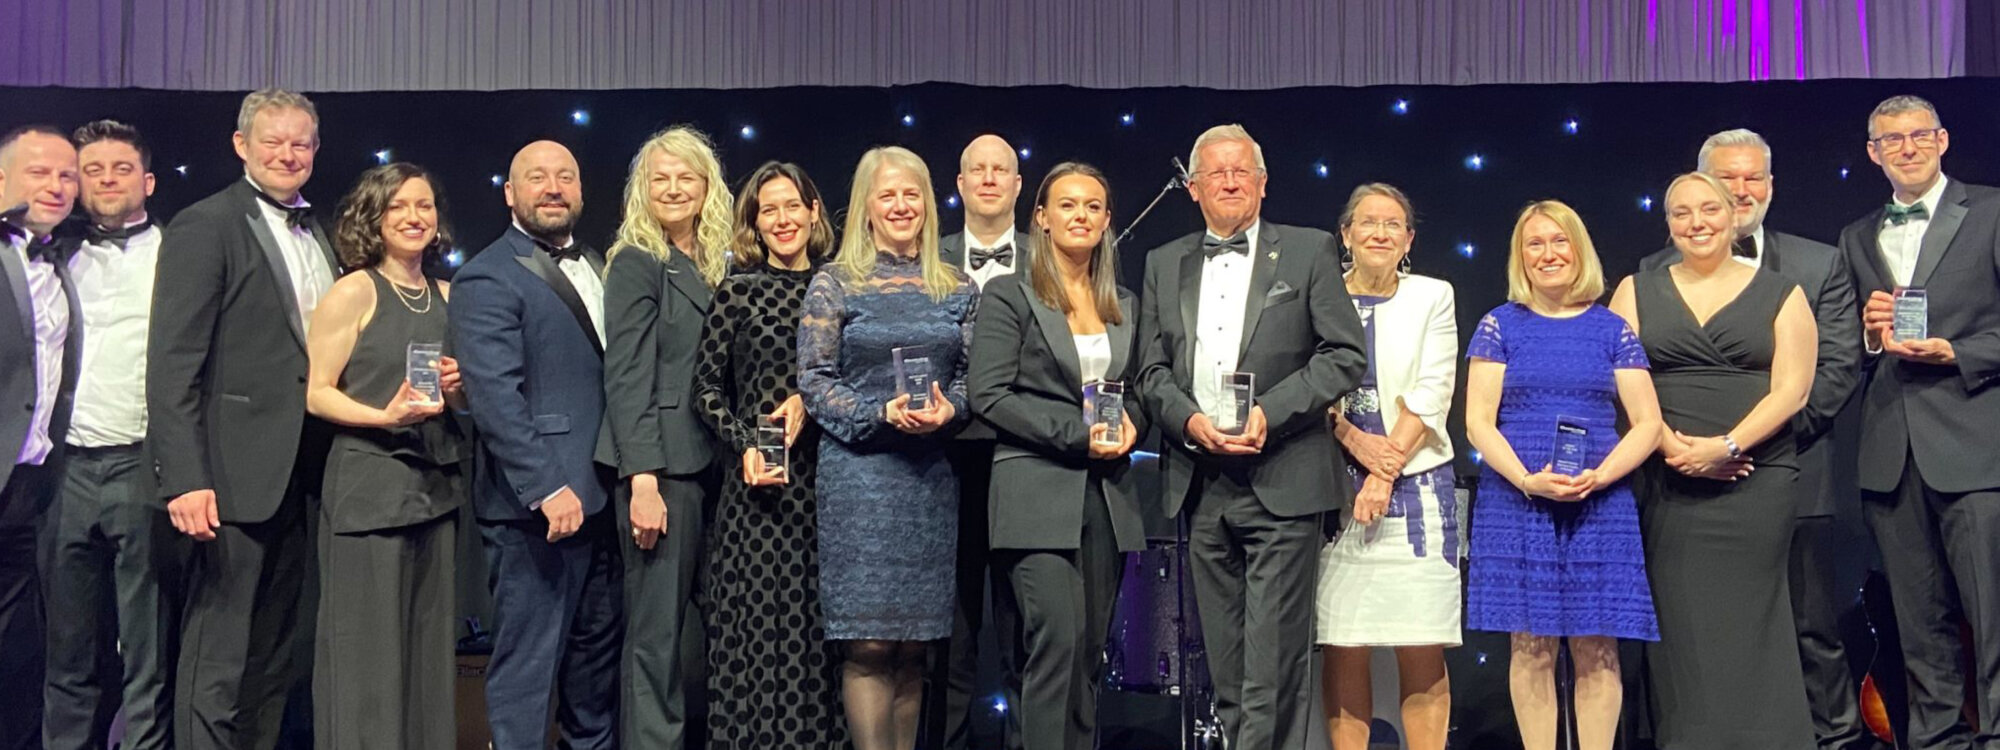 Scott Bader UK wins 2023 Chemicals Northwest Awards for Sustainability and Health & Safety